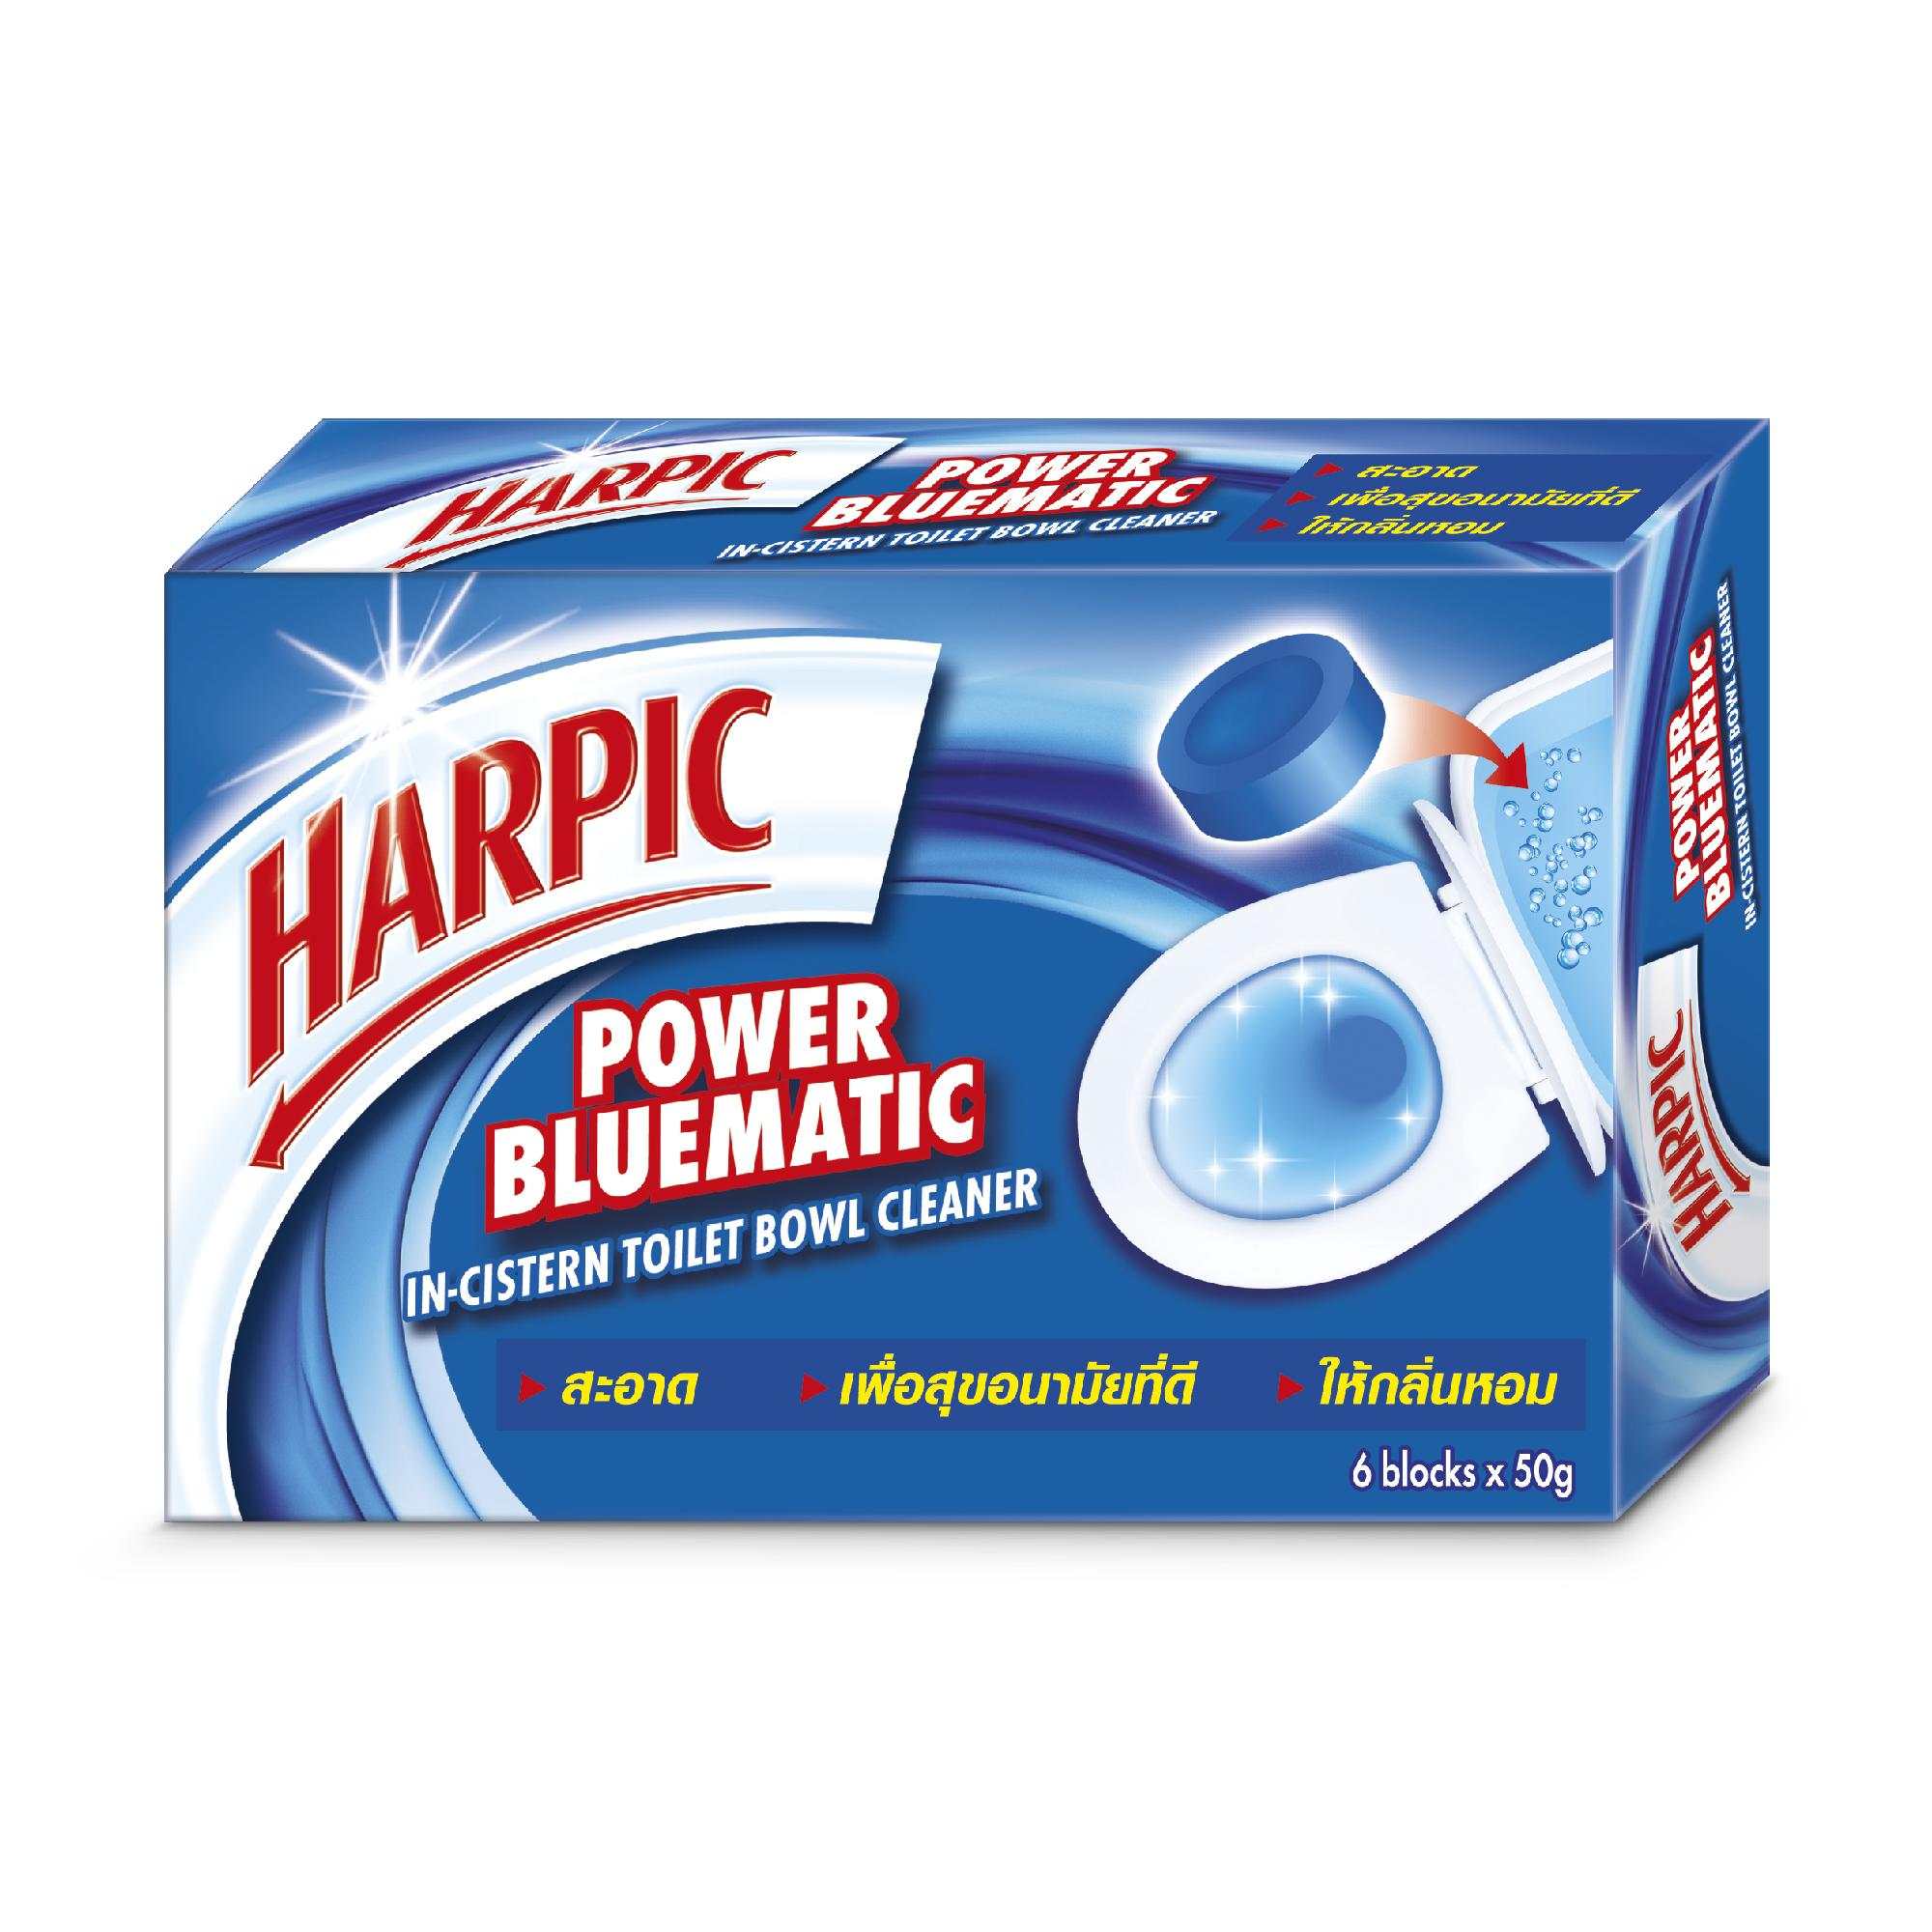 Harpic_Blue_matic_50g%20-%203186672%20%28F%29%202000x2000px.jpg